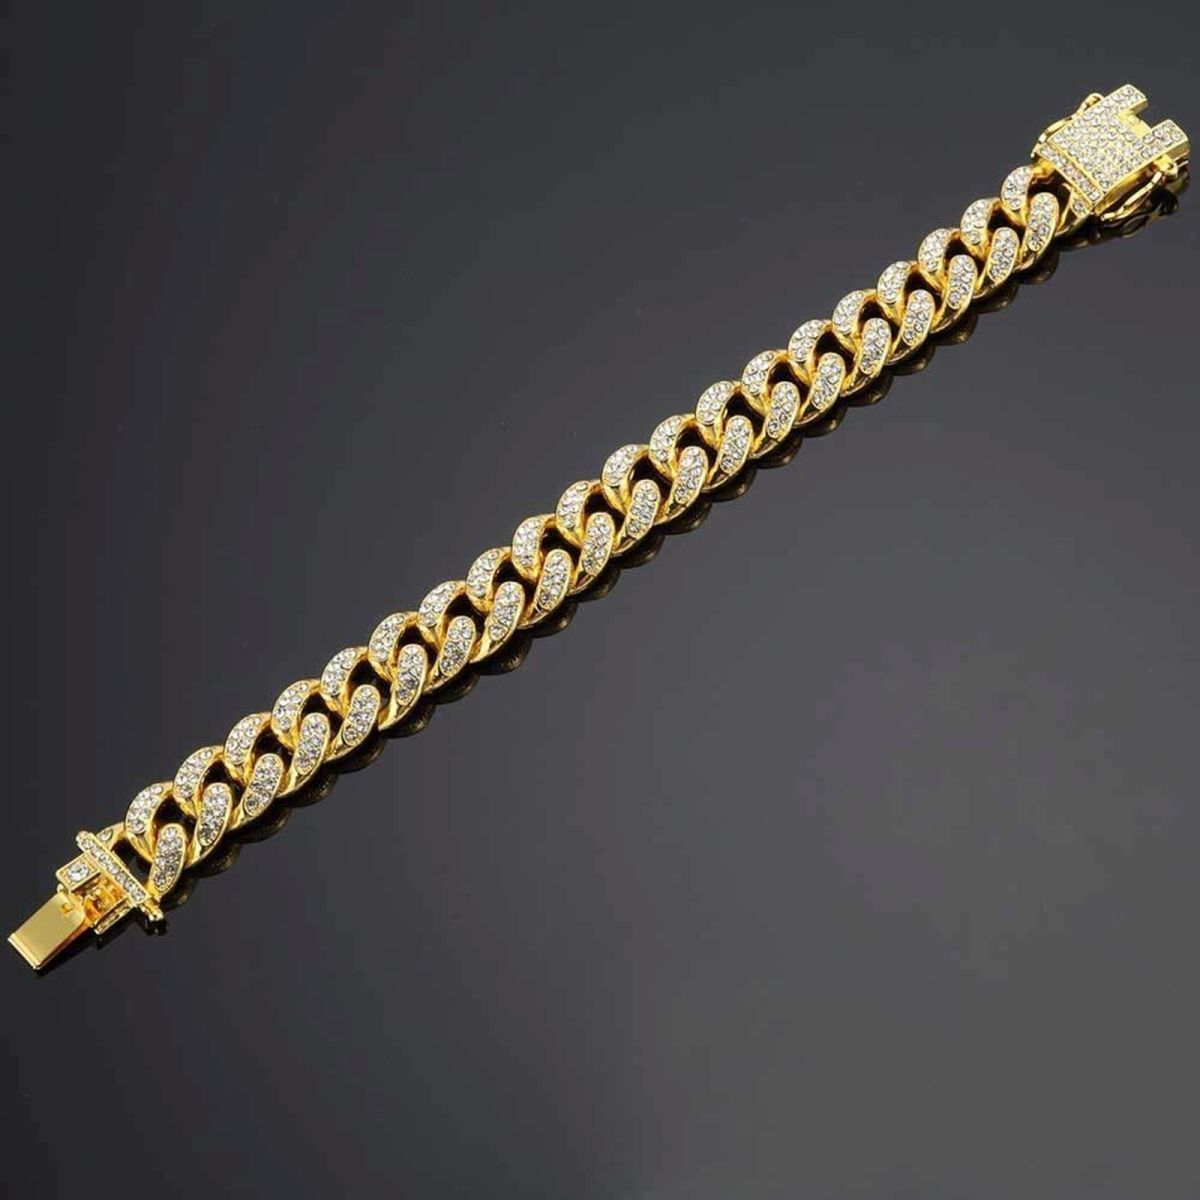 Chunky Heavy 32mm width USA Men's Gold Filled Bracelet 316L Stainless Steel  Bracelets & Bangles Boys Punk Hip Hop Jewelry Gifts | Wish